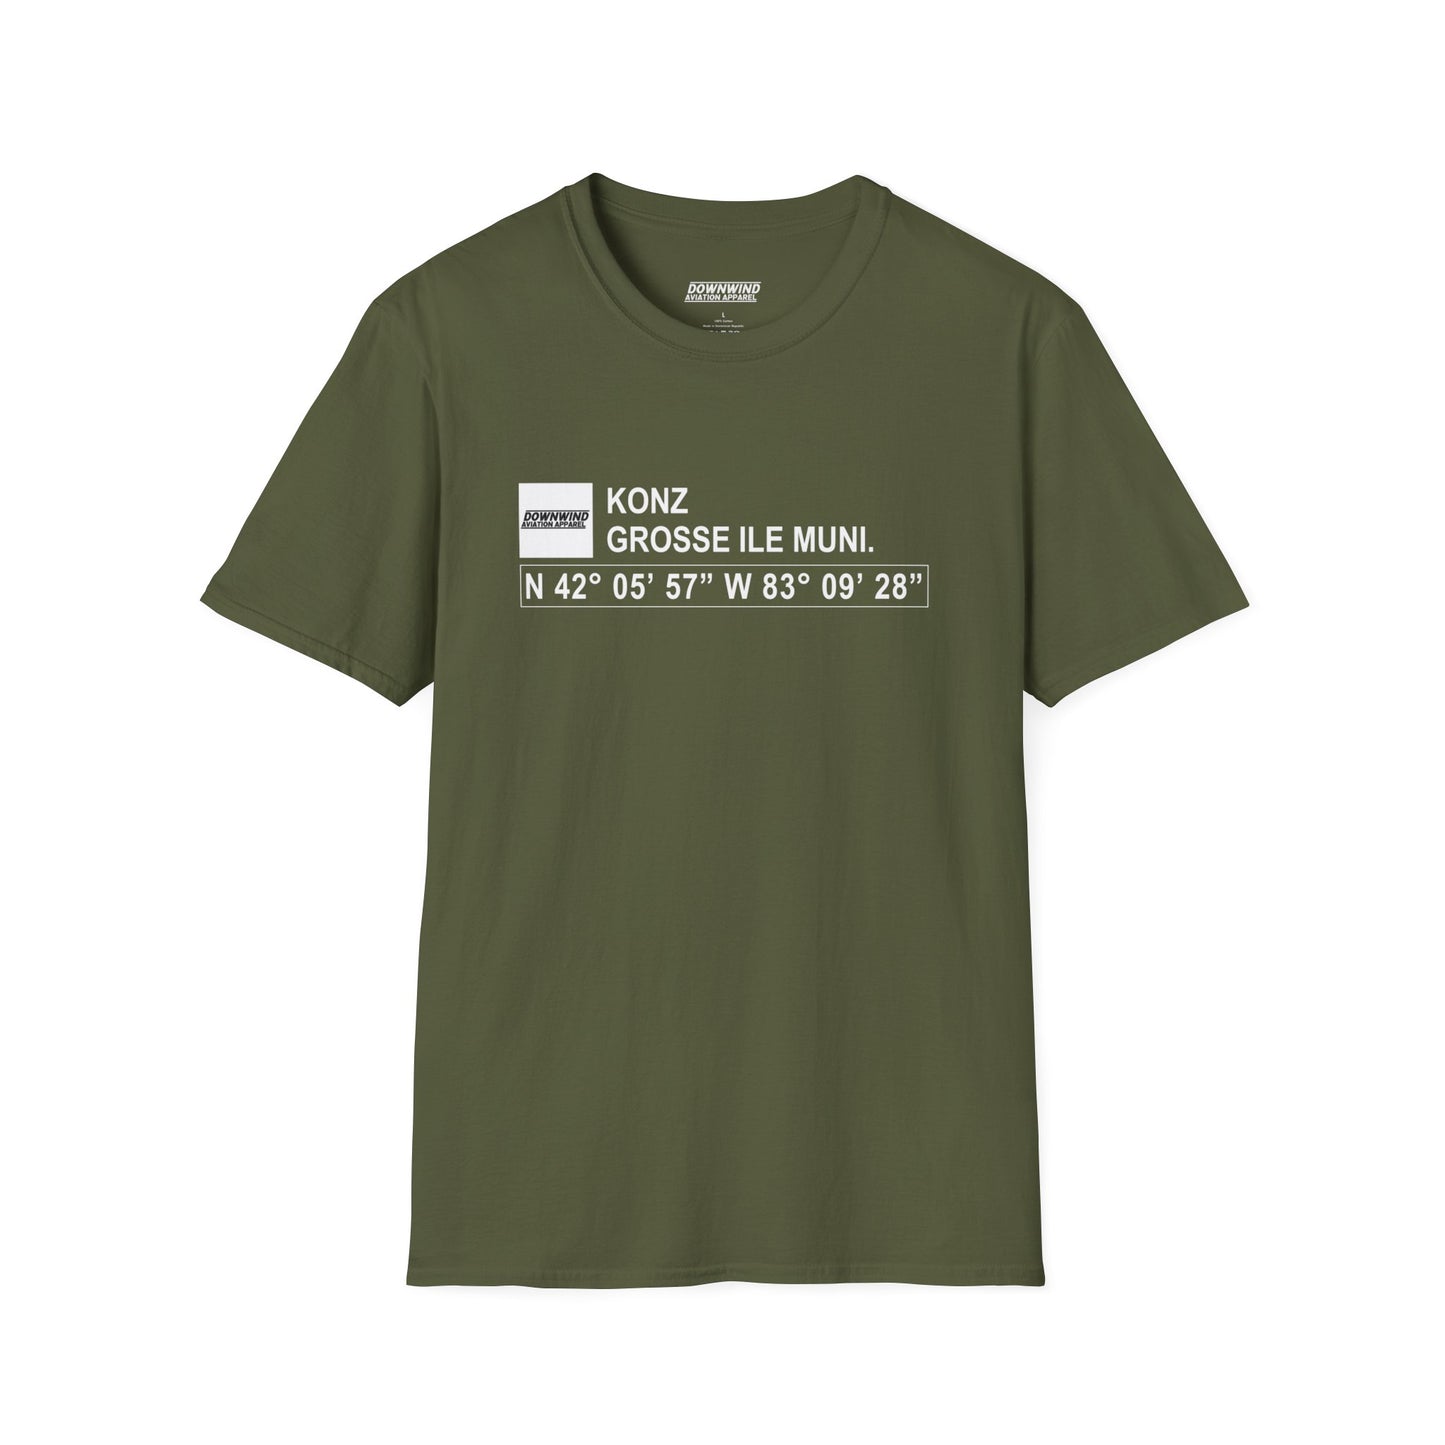 KONZ / Grosse Ile Muni. T-Shirt